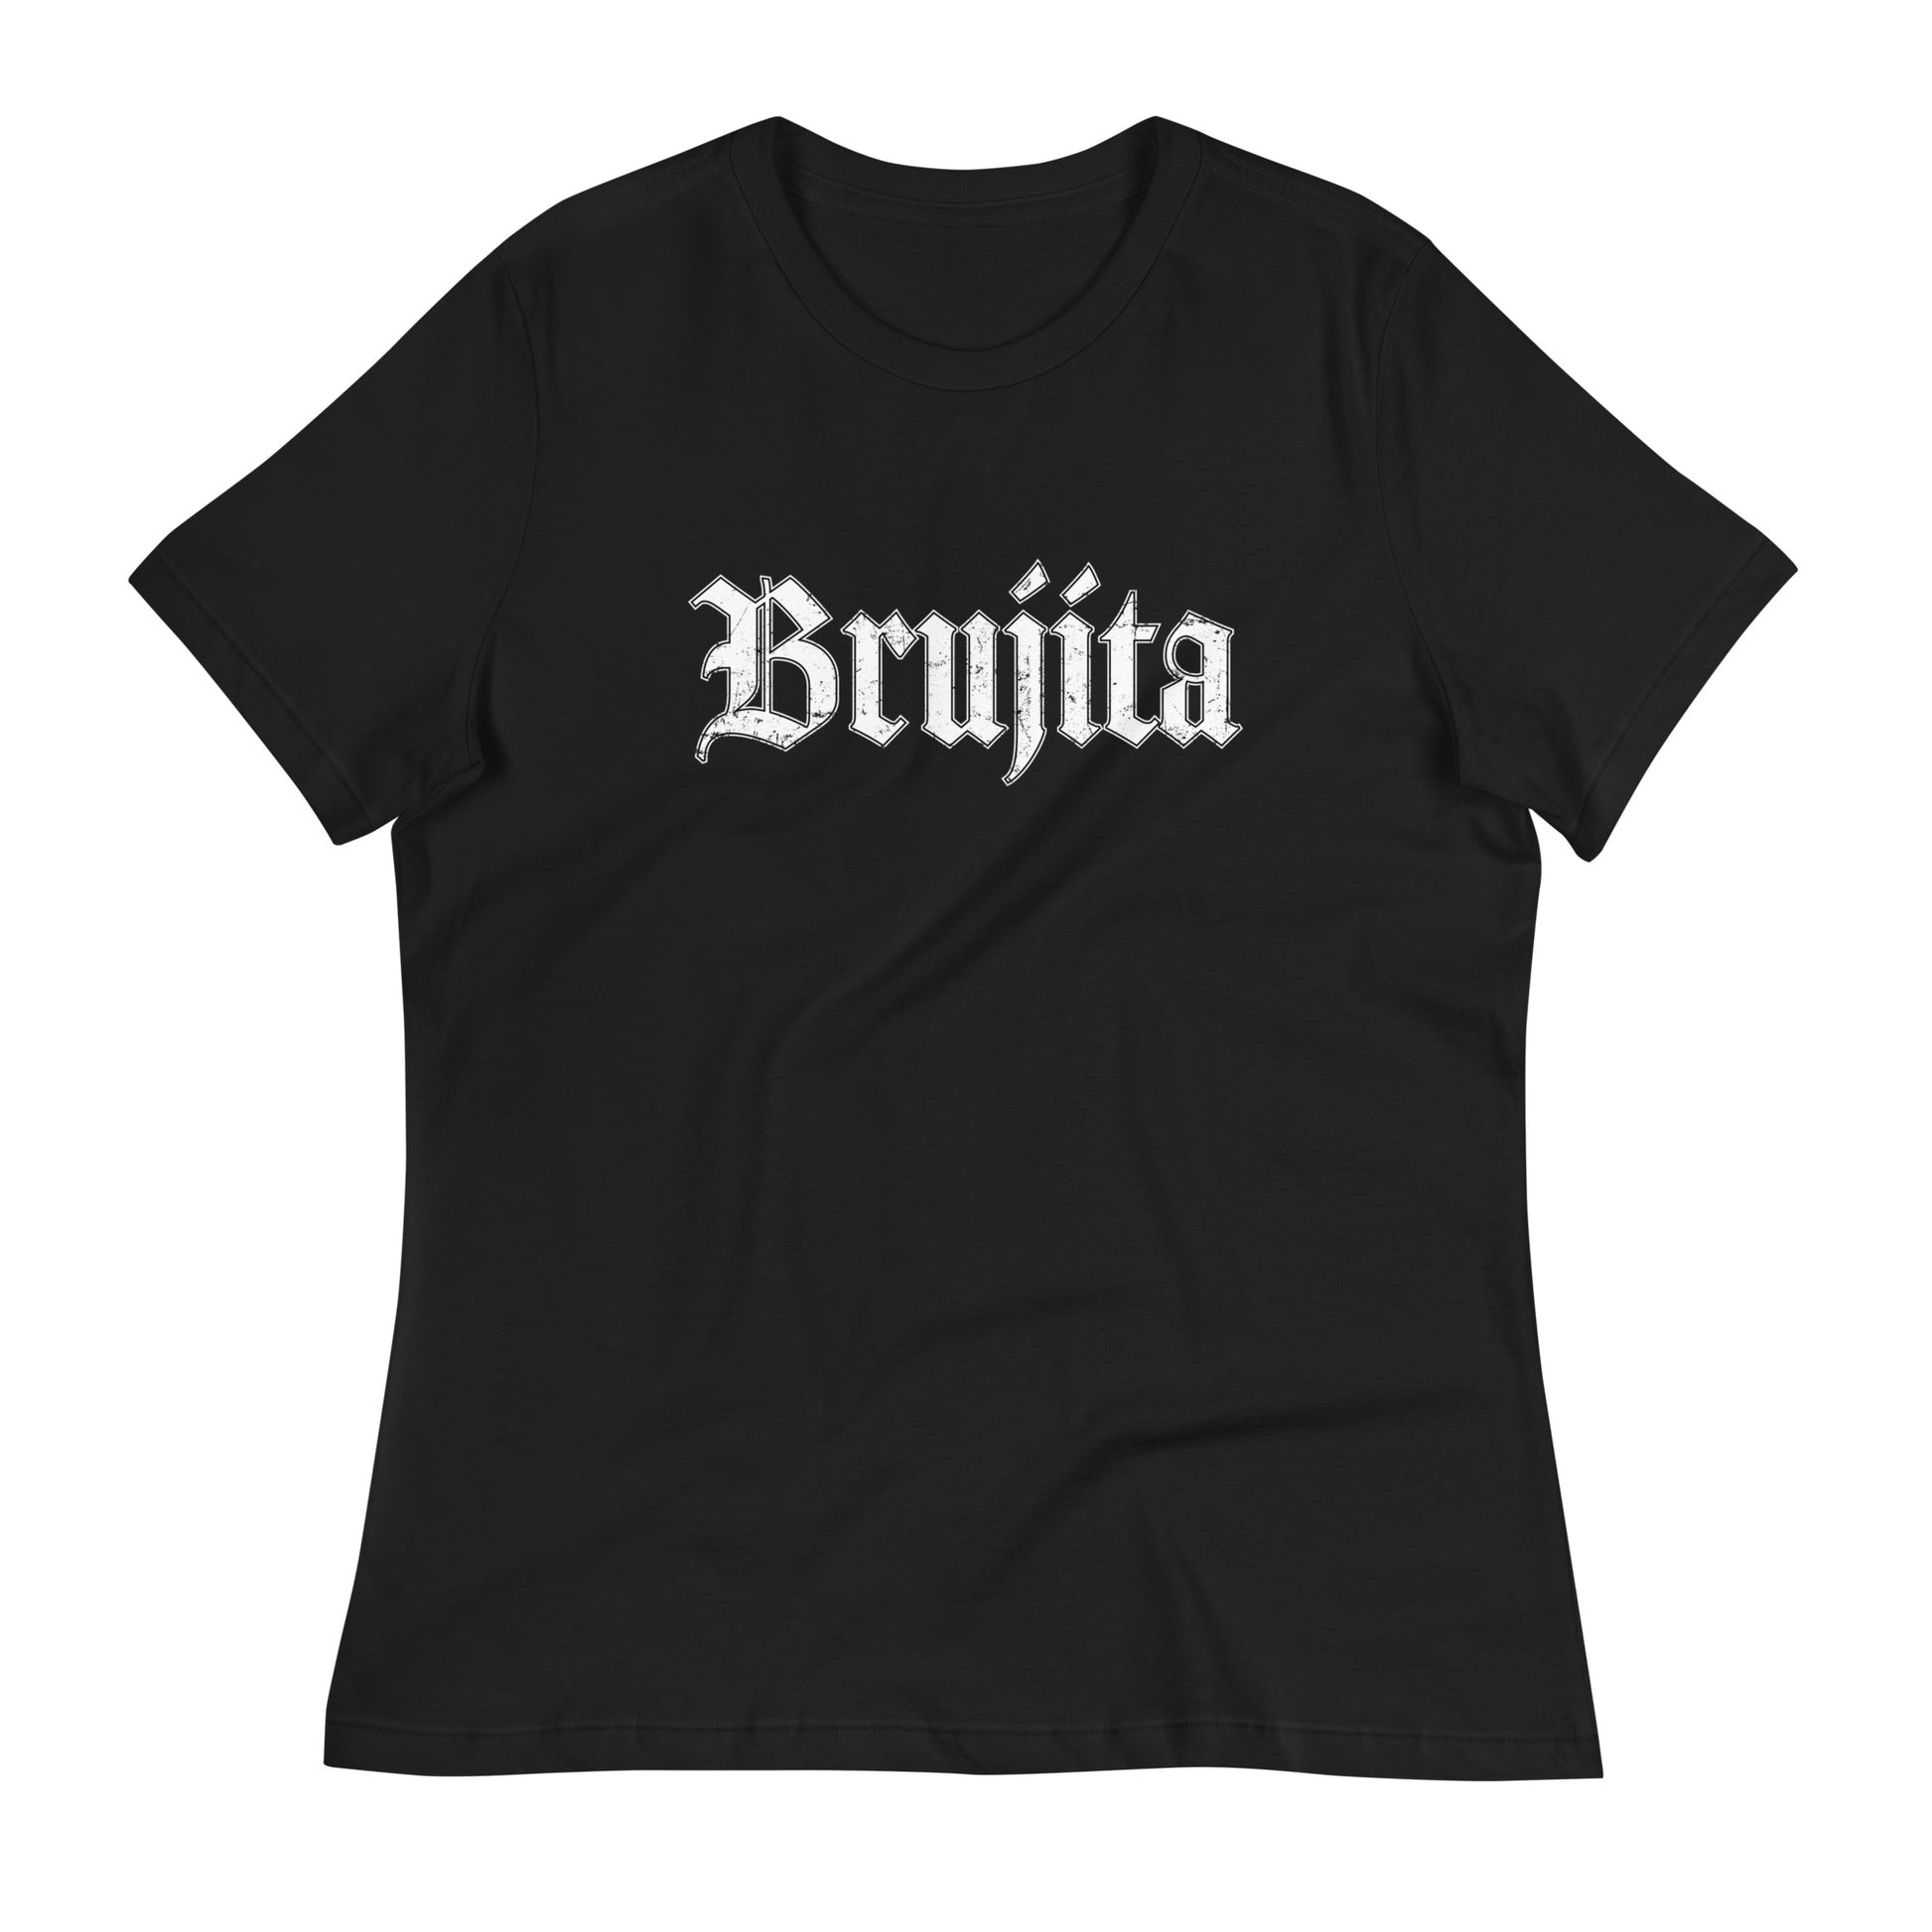 Brujita Women's Distressed Halloween T-Shirt flat lay – Black tee with white 'Brujita' text in Old English distressed font